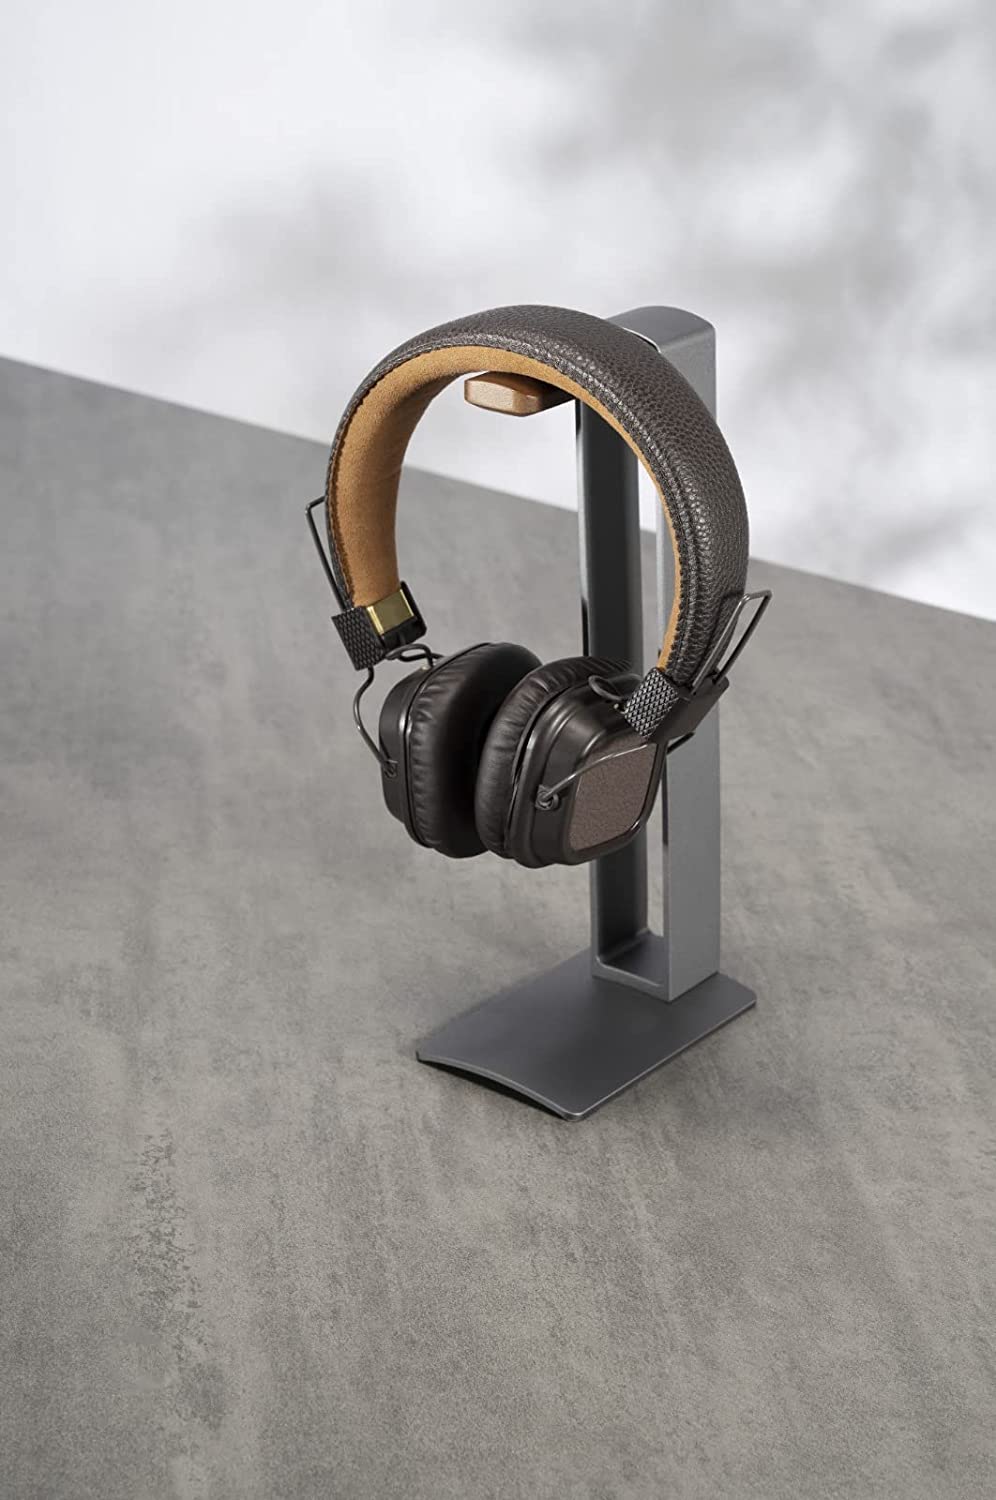 Navodesk Wooden & Aluminium headphone Stand, Ergonomic Desk Accessory